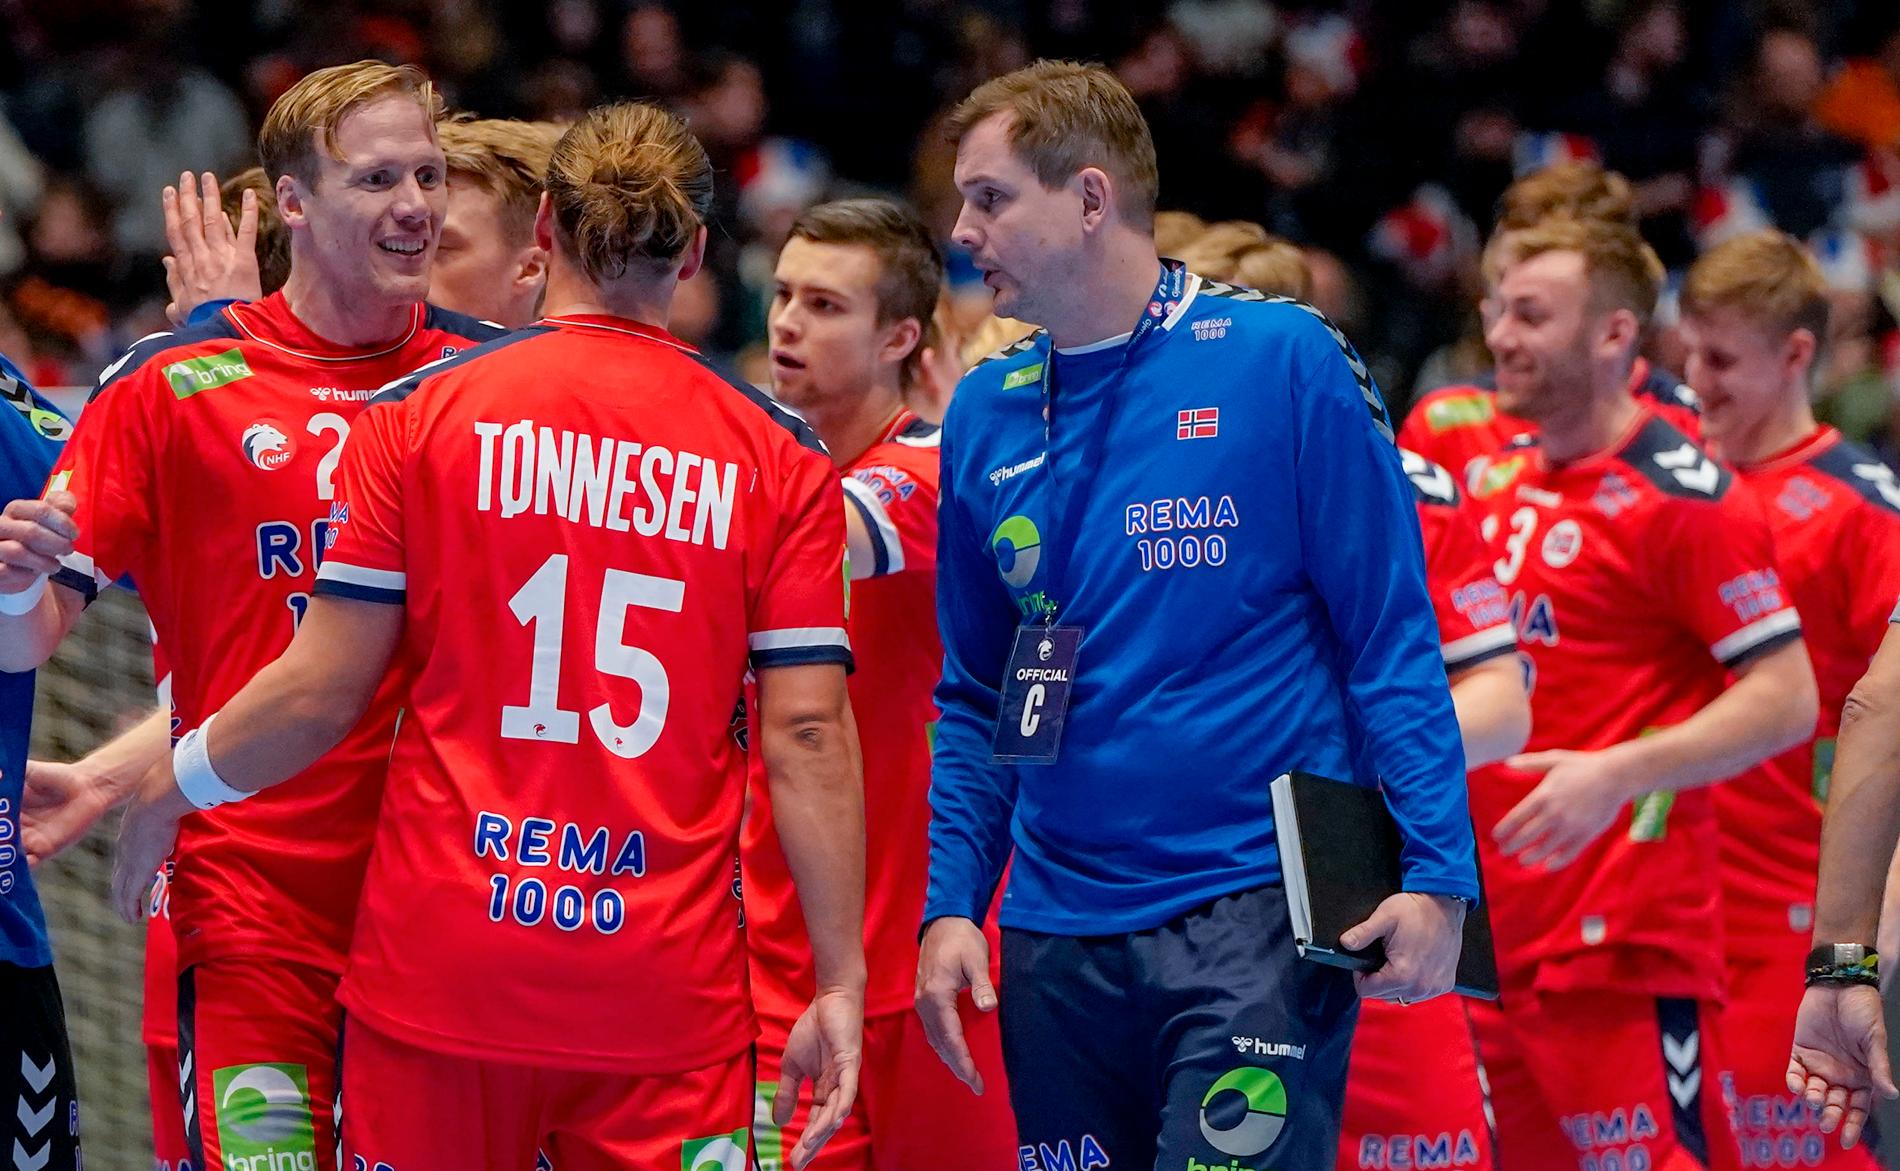 Sweden’s Martin Boquist Expelled: Handballgutta’s New Golden Man